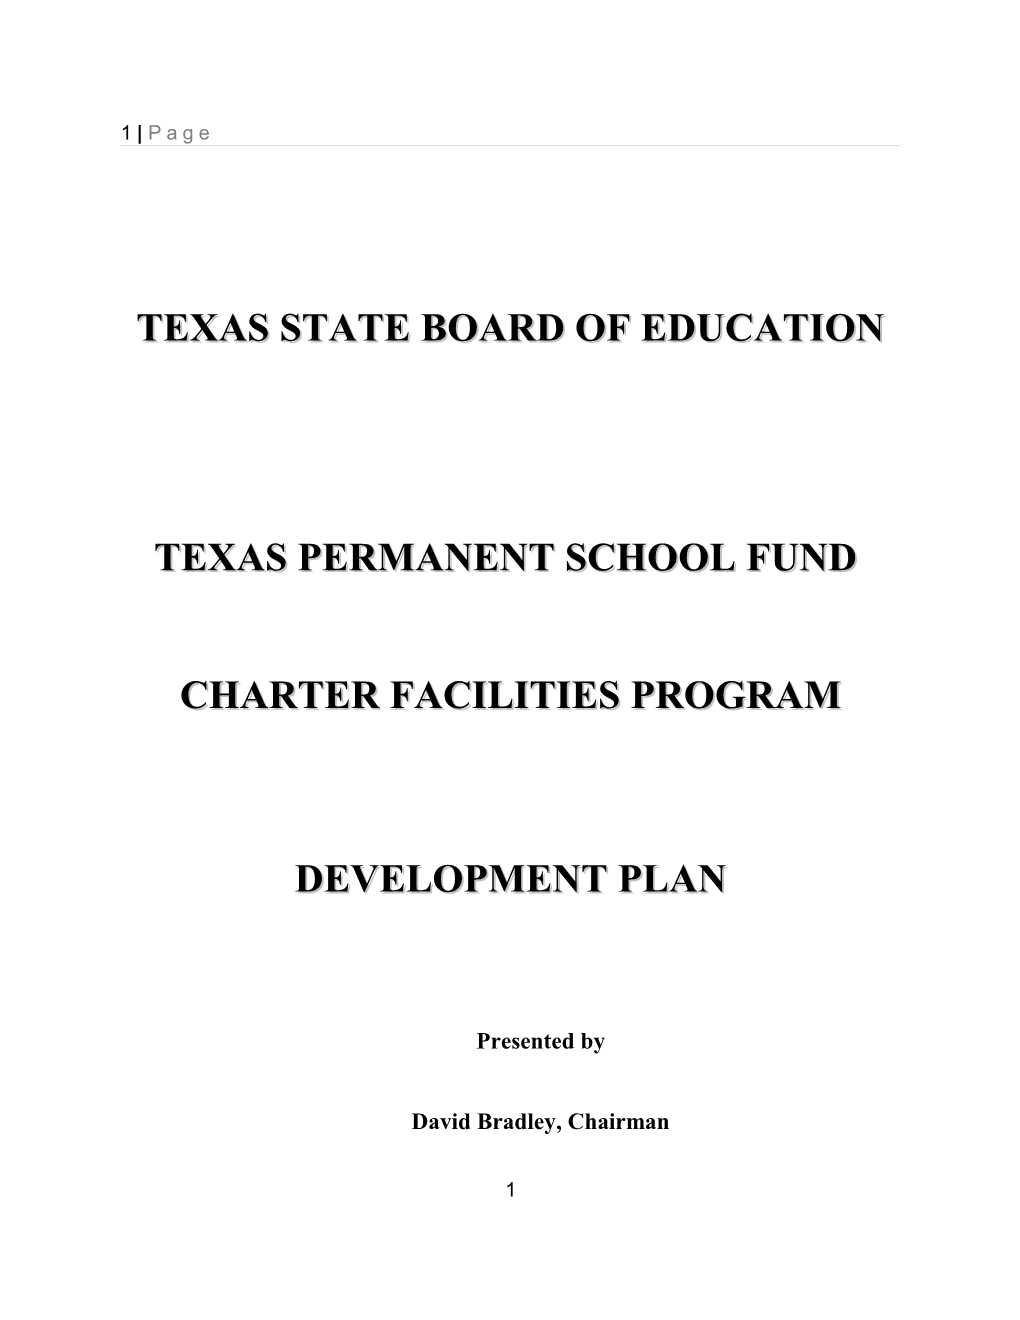 Texas Permanent School Fund (Tpsf)